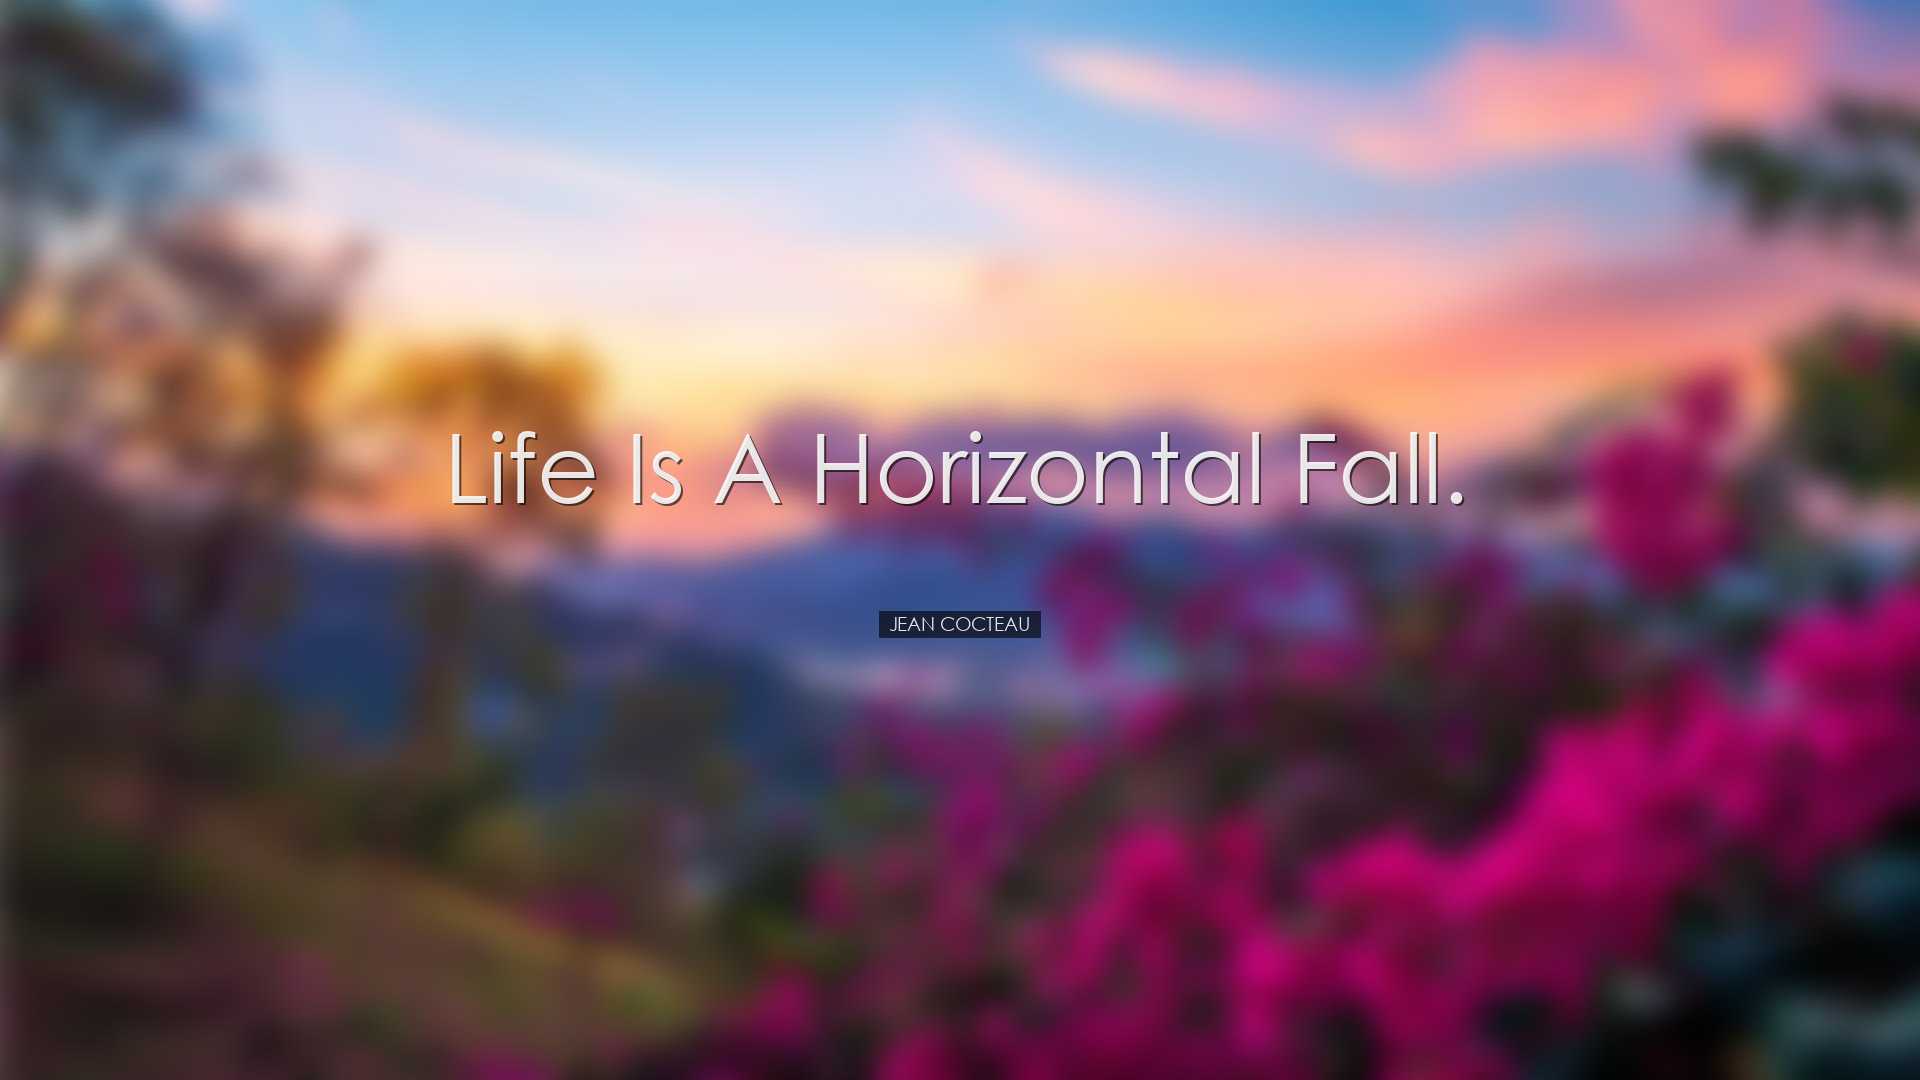 Life is a horizontal fall. - Jean Cocteau